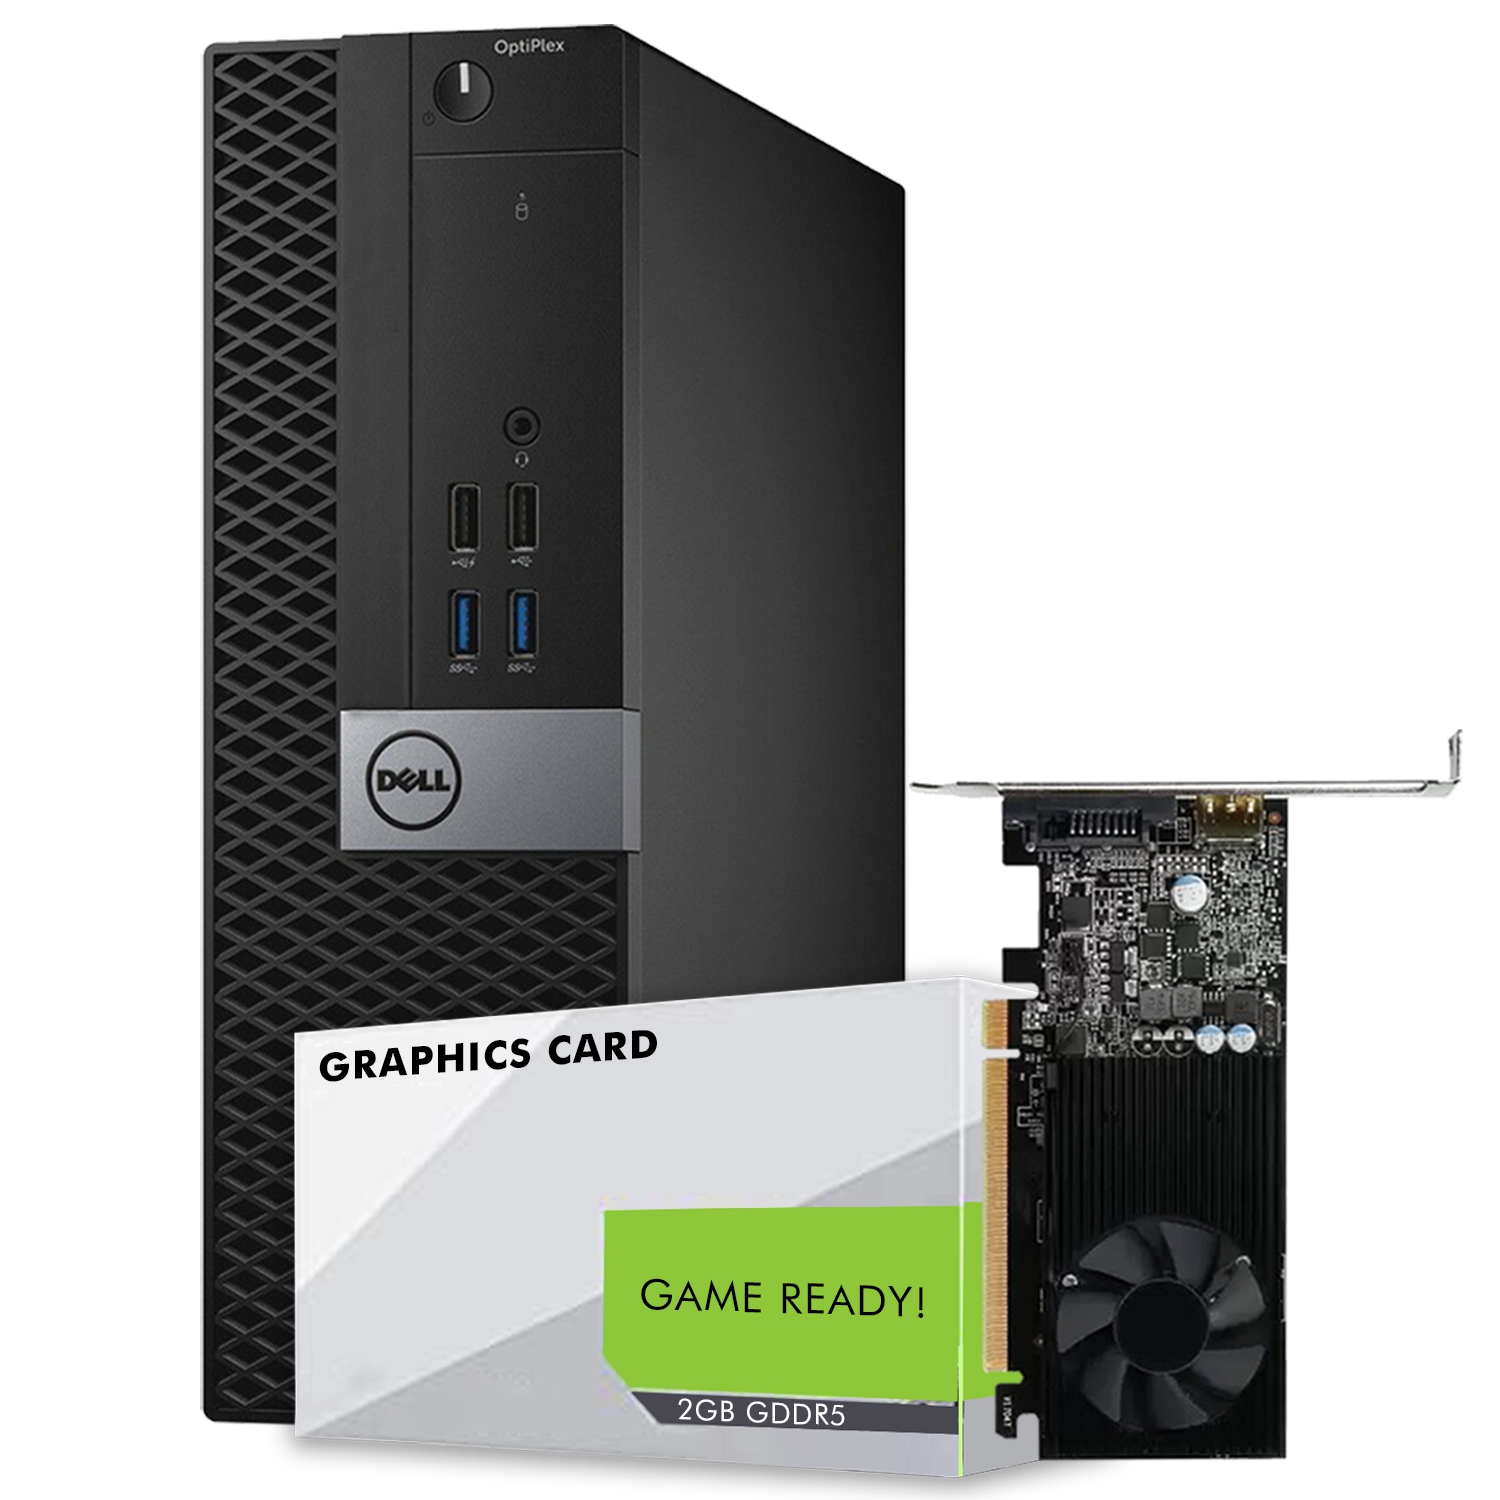 Refurbished (Good) - Dell Gaming Desktop PC Optiplex with Nvidia GeForce GT1030 Graphics Card |Intel i7 3.4Ghz Processor | 512GB SSD, 16GB RAM |Windows 10 Pro|Keyboard & Mouse|WiFI